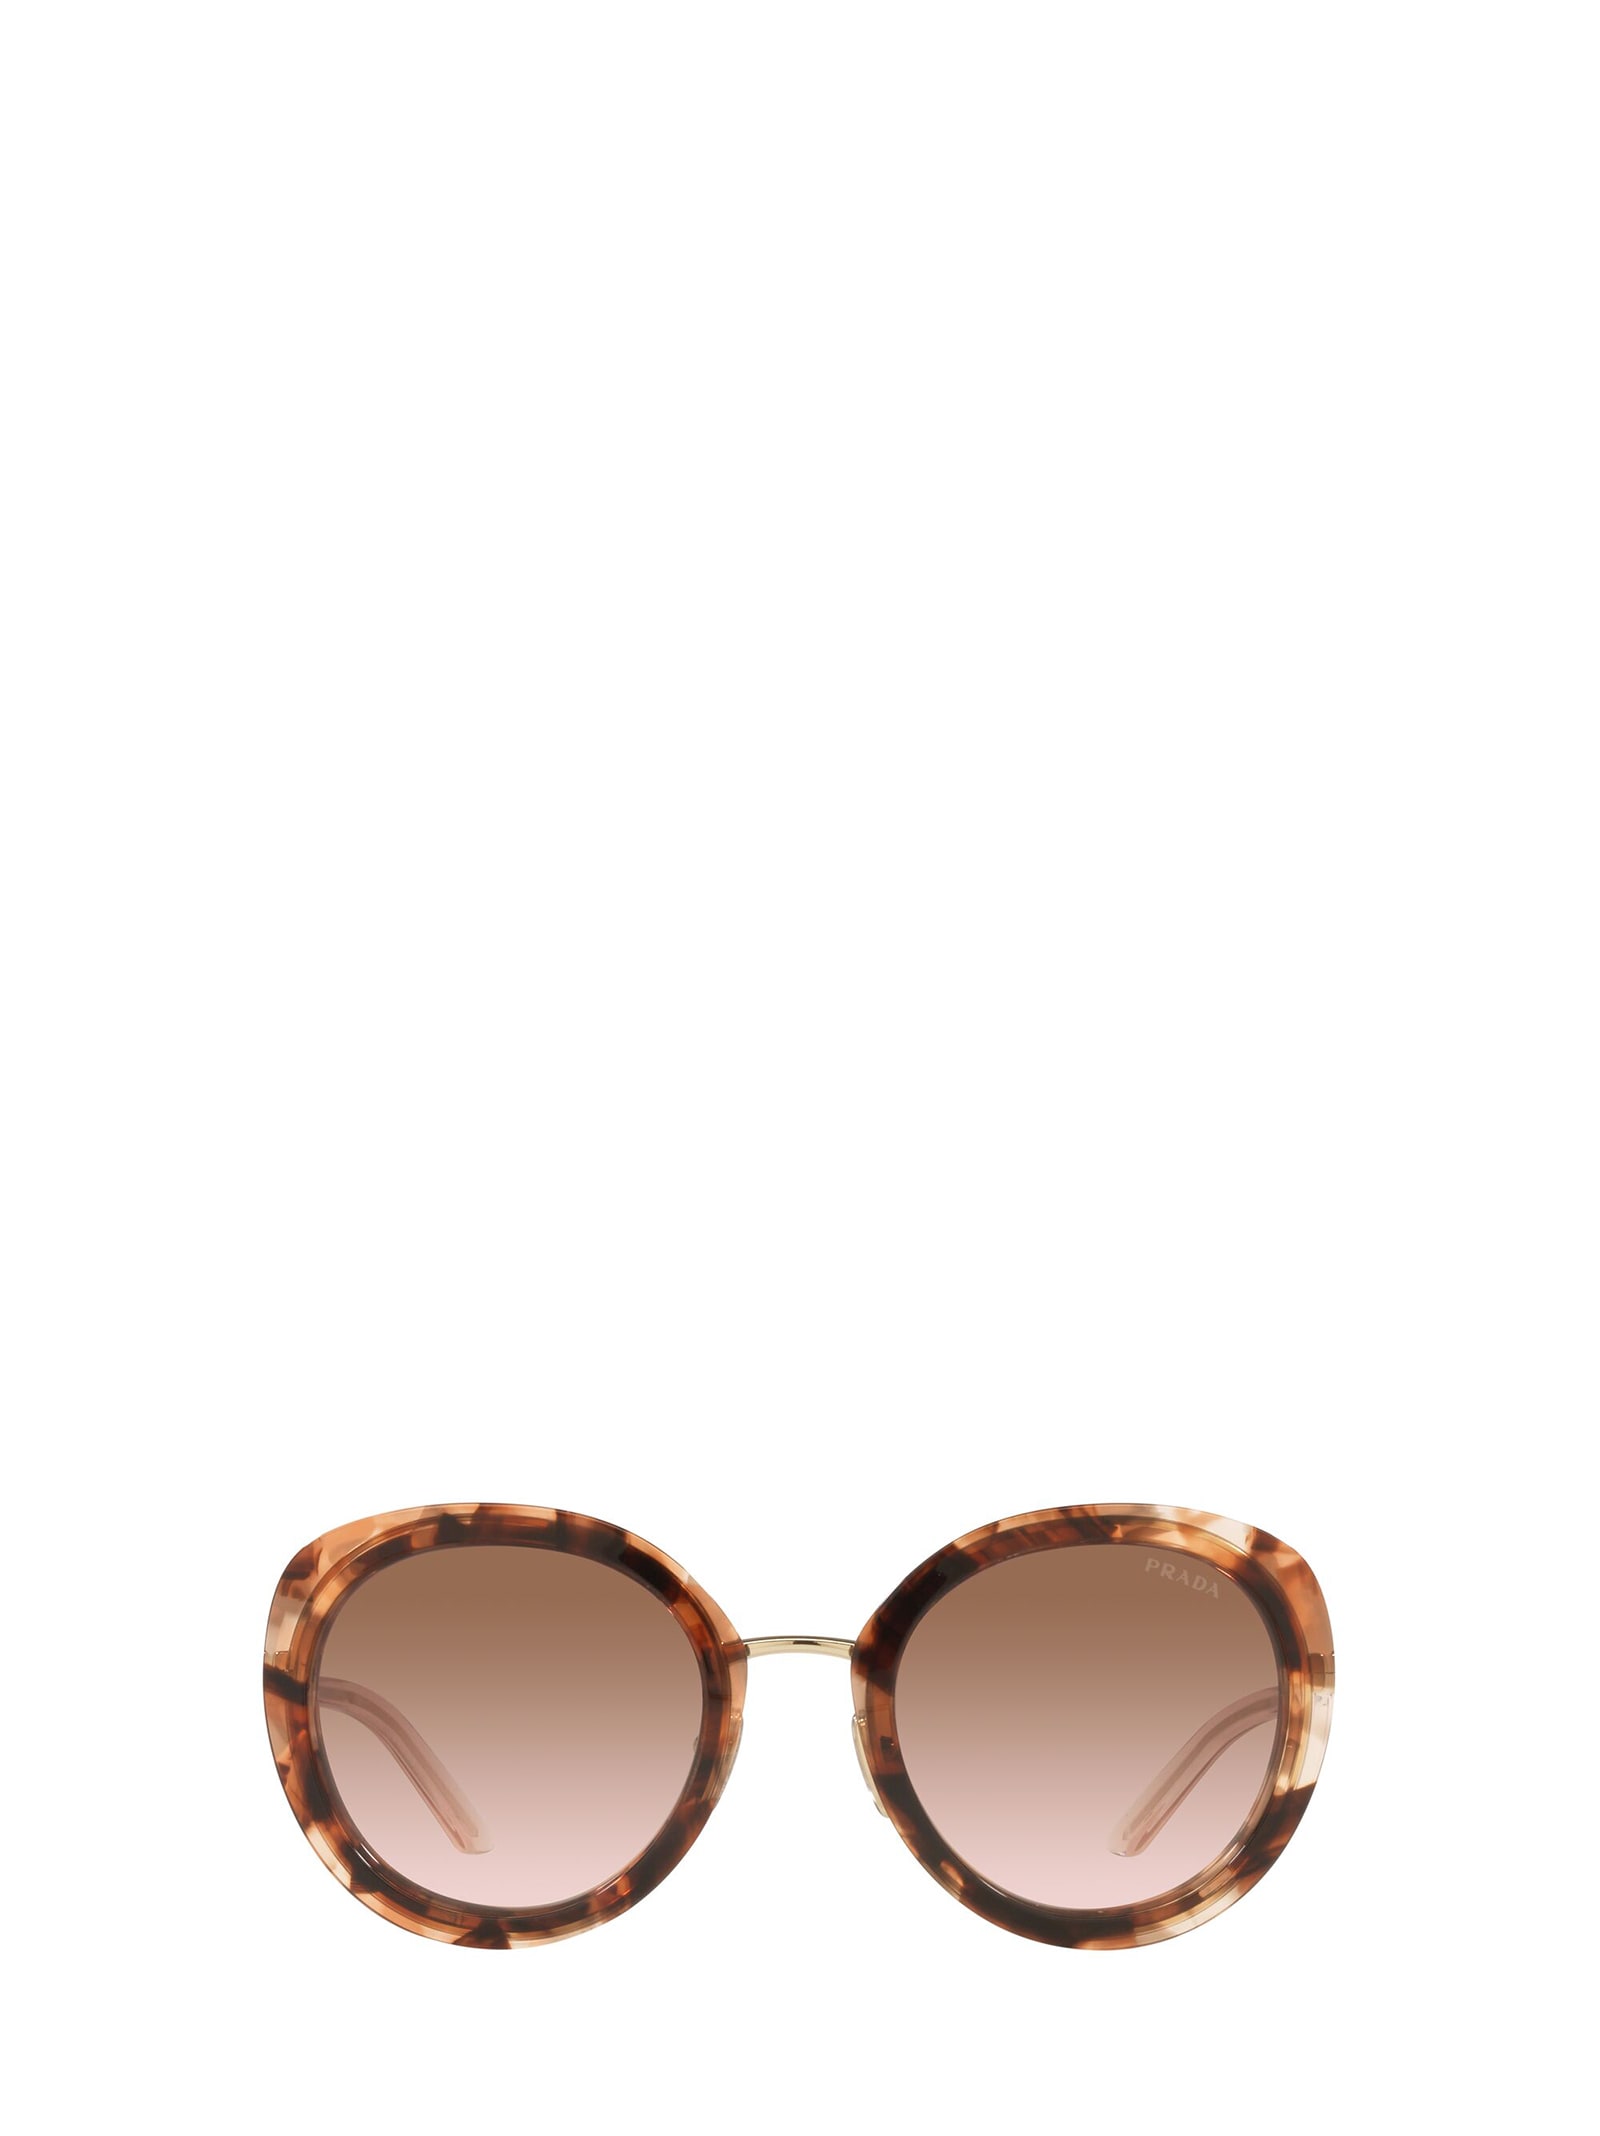 Prada Eyewear Prada Pr 54ys Caramel Tortoise Sunglasses